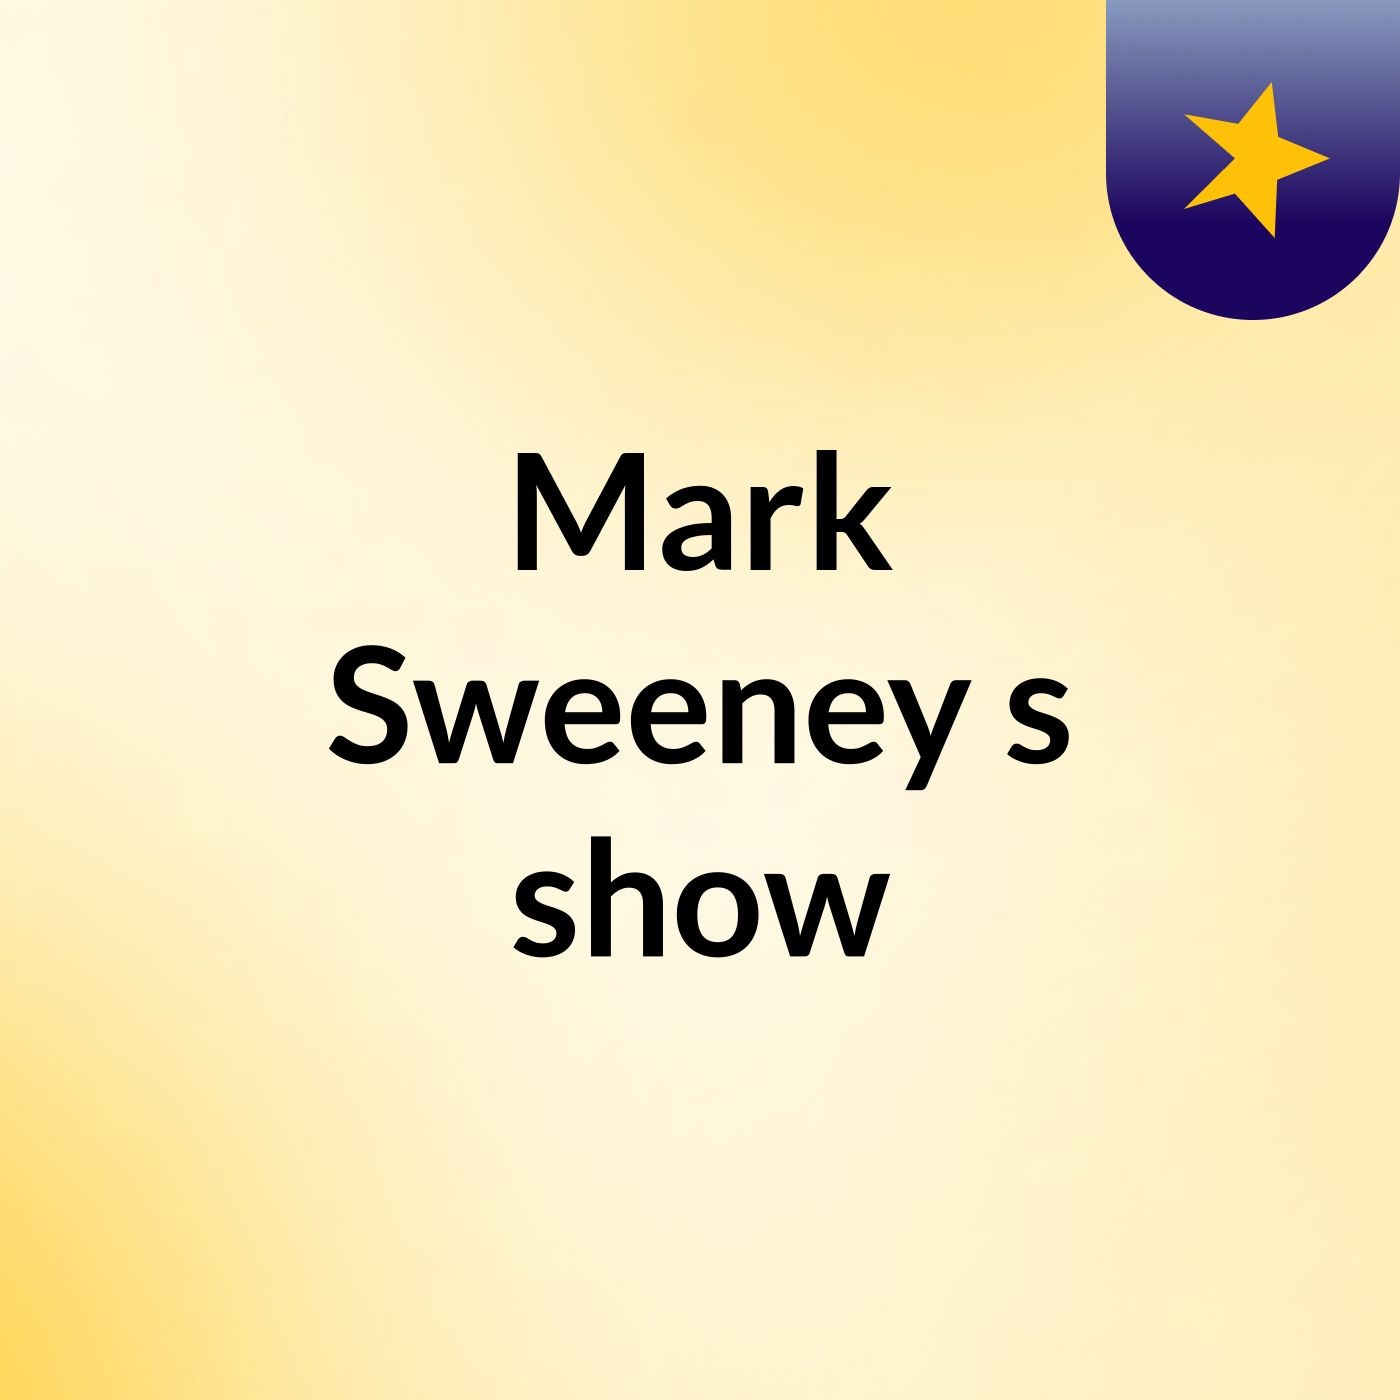 Mark Sweeney's show